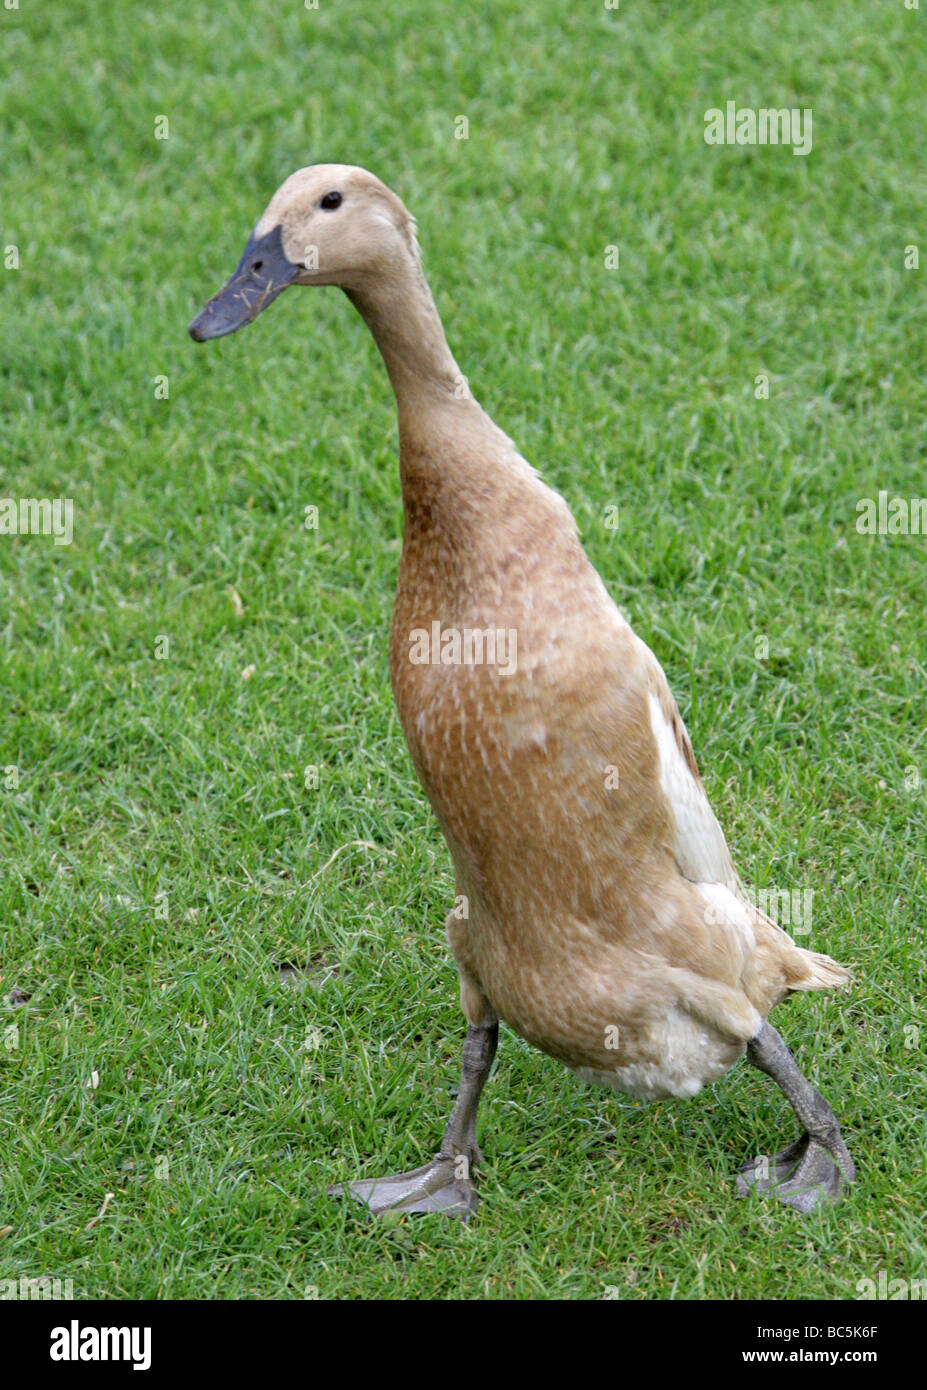 Buff Indian Runner Duck, Anatidae, Anseriformes Stock Photo